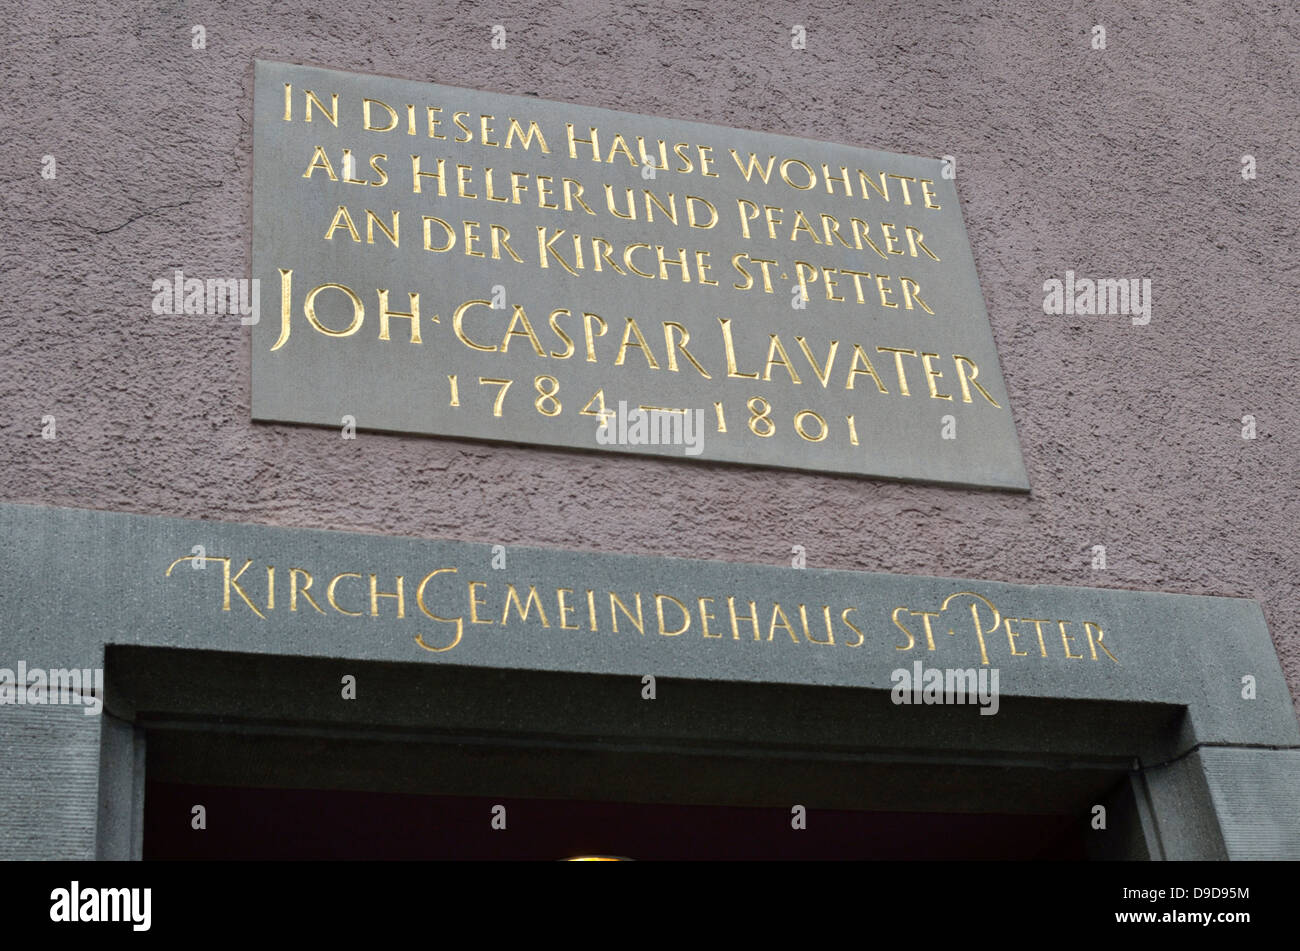 Lapide commemorativa Johann Caspar Lavater, Kirchgemeindehaus San Pietro, Zurigo, Svizzera. Foto Stock